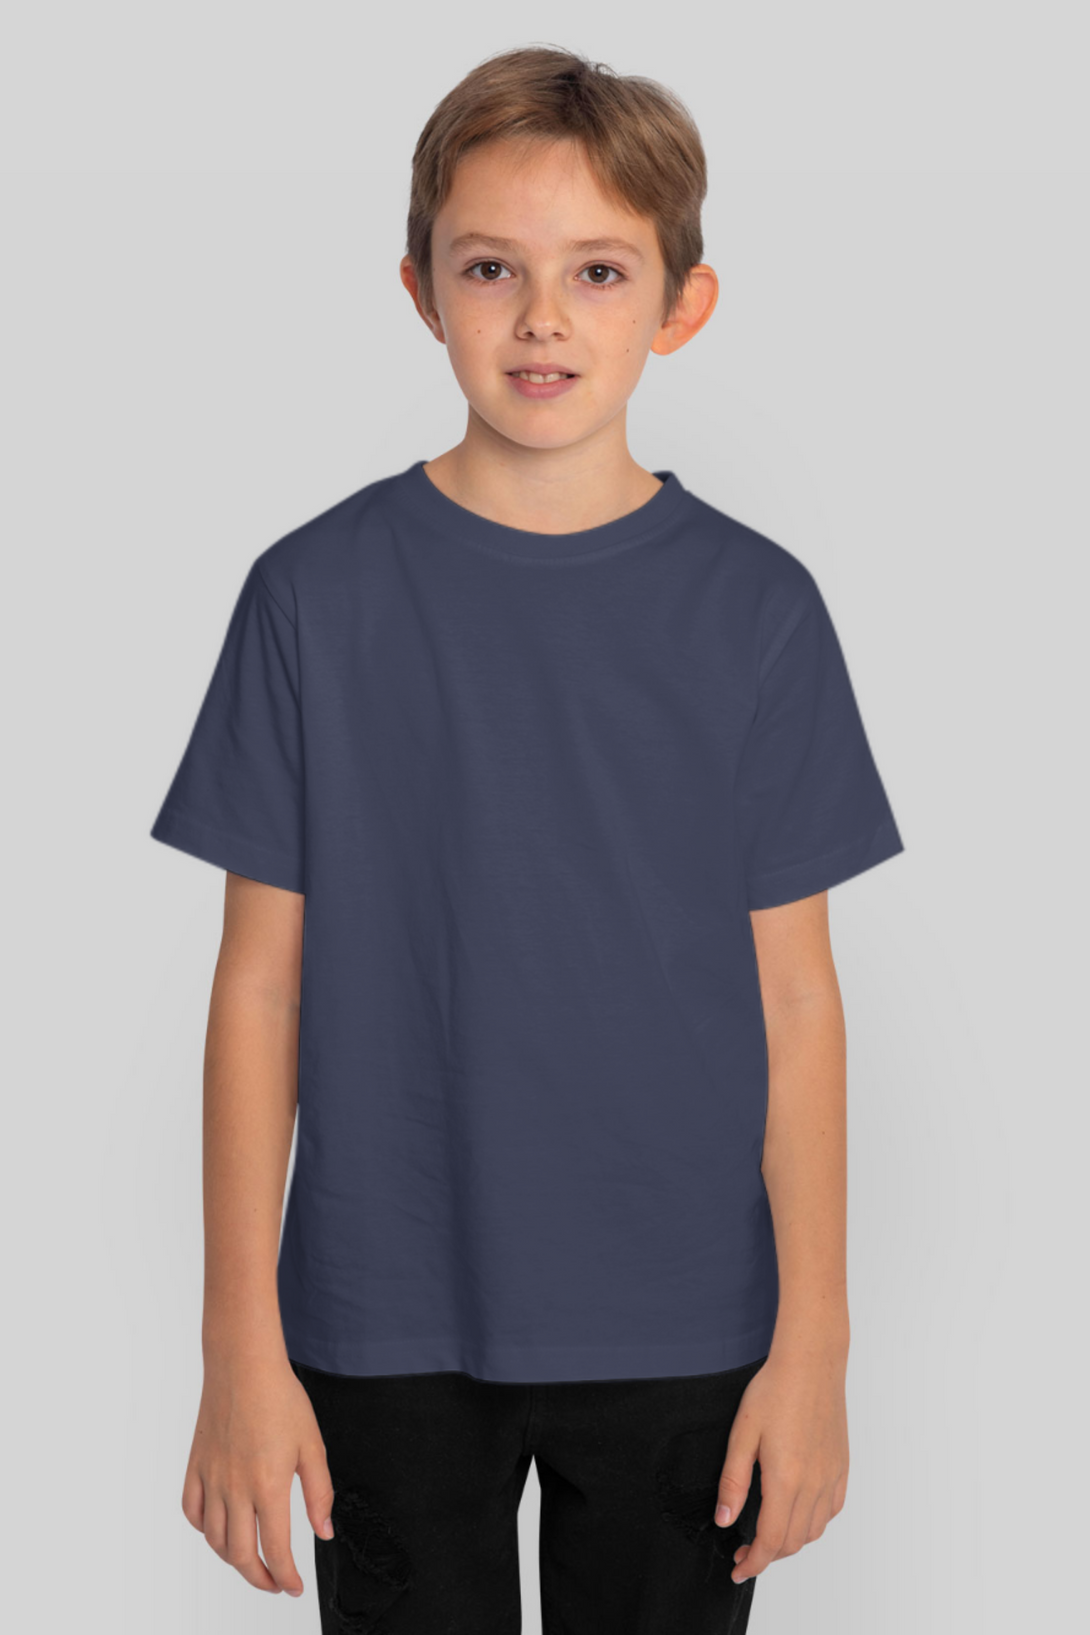 Navy Blue T-Shirt For Boy - WowWaves - 1